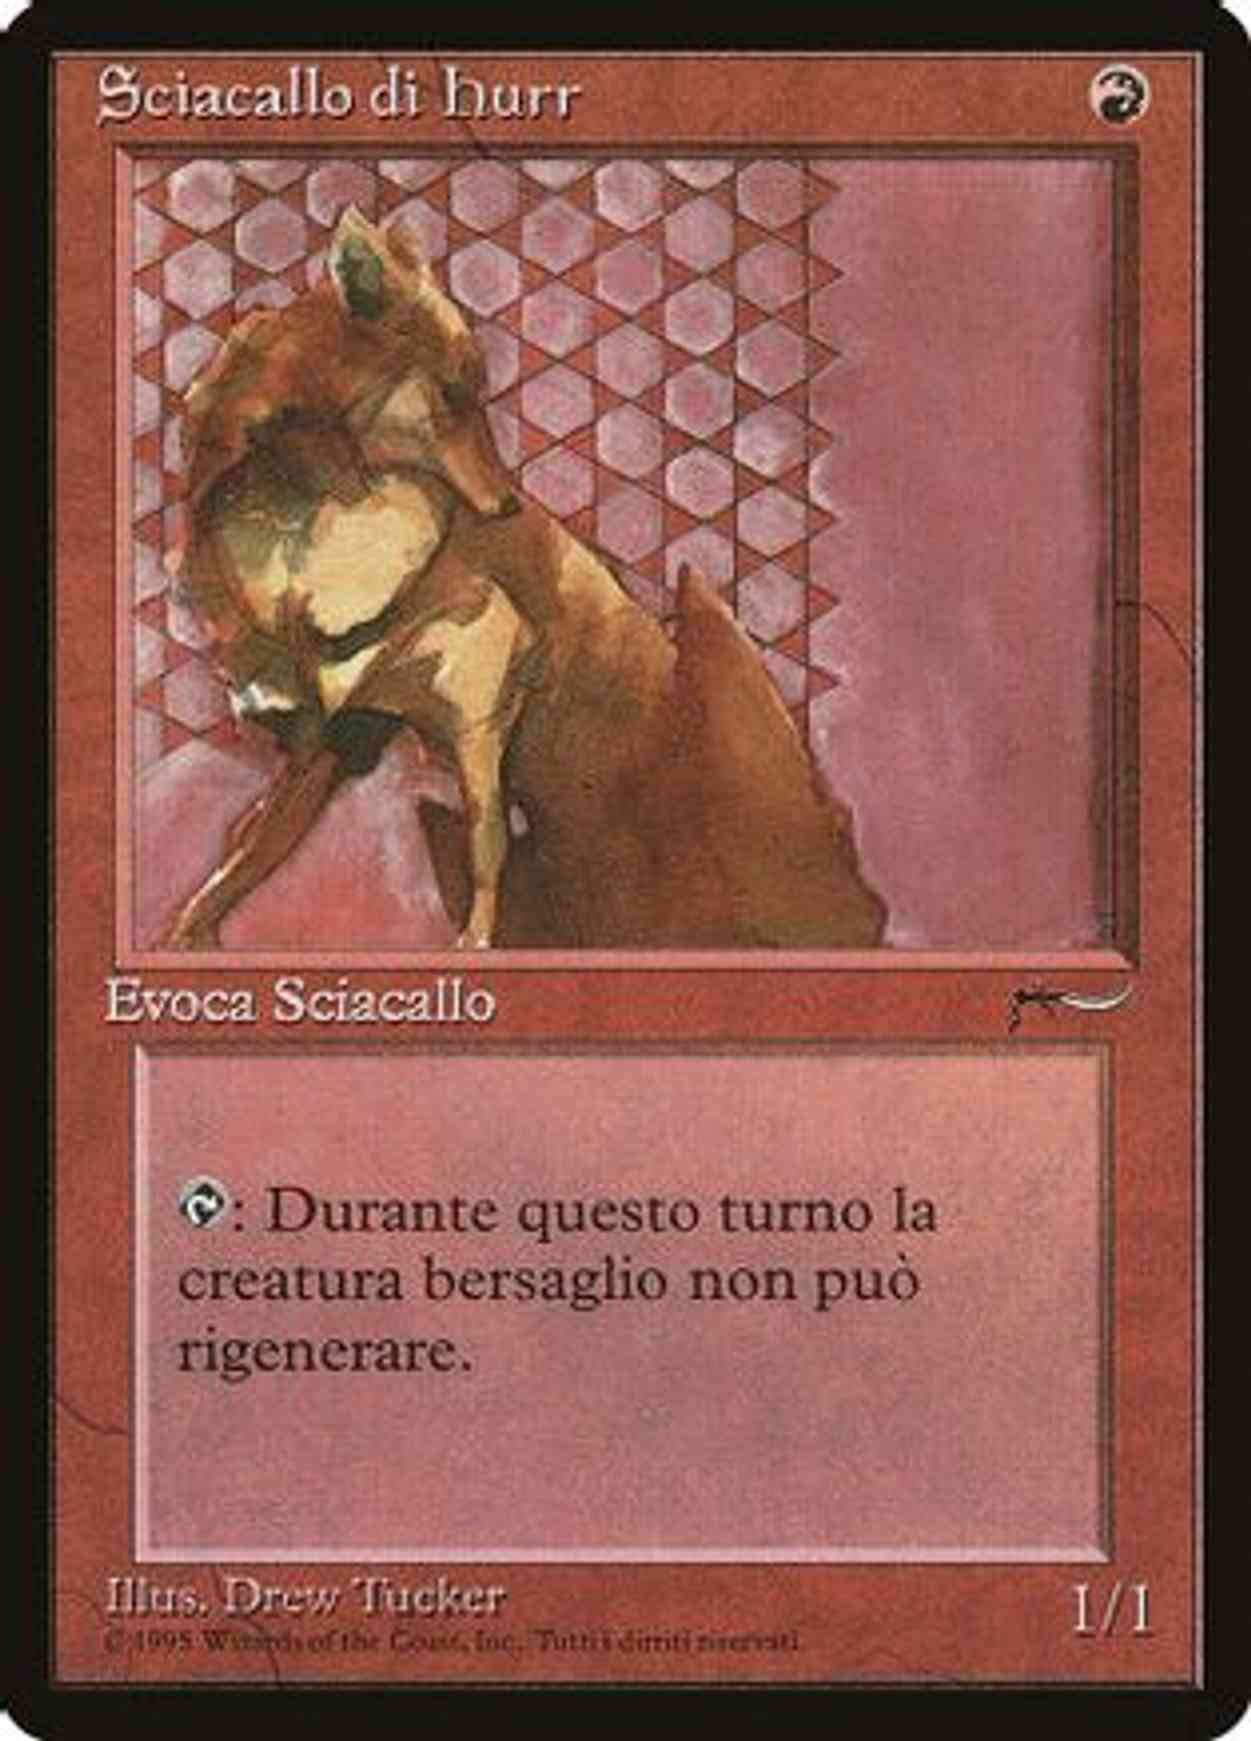 Hurr Jackal (Italian) - "Sciacallo di hurr" magic card front